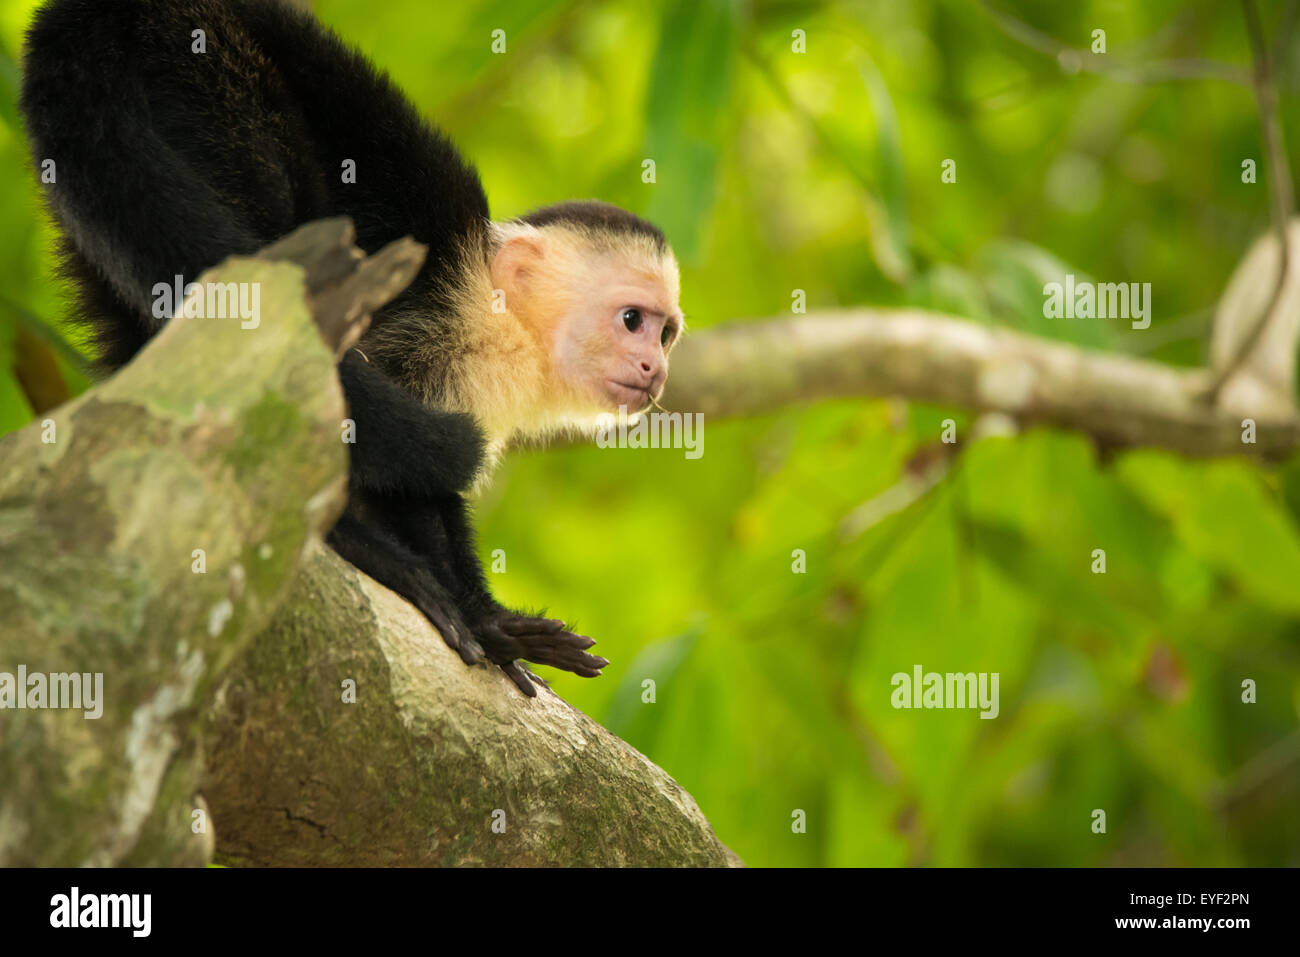 A baby White face capuchin monkey climbing Stock Photo